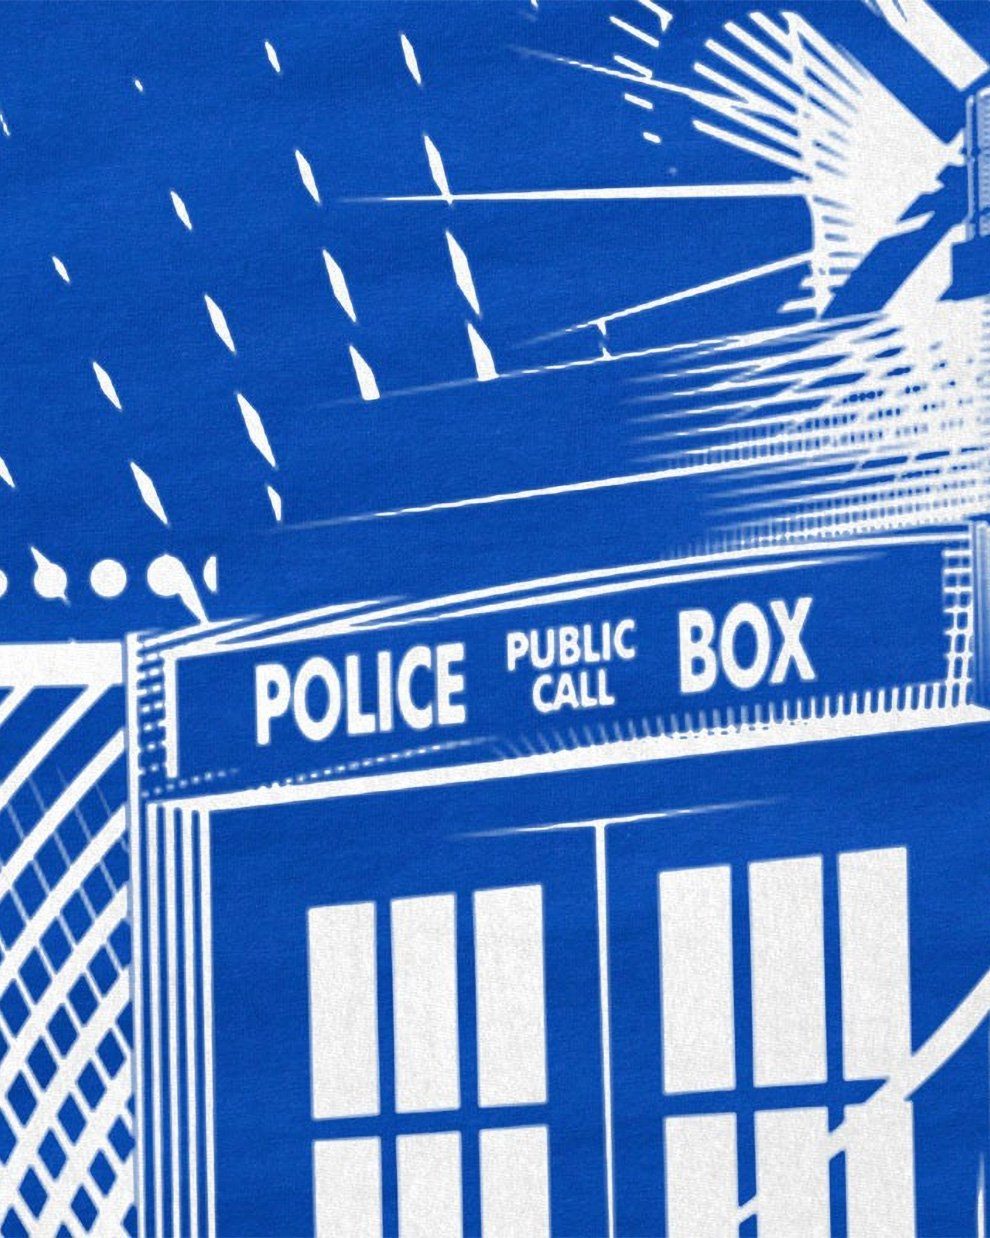 dalek doktor Herren space box police Who T-Shirt Print-Shirt style3 tardis blau tv dr Zeitreise doctor